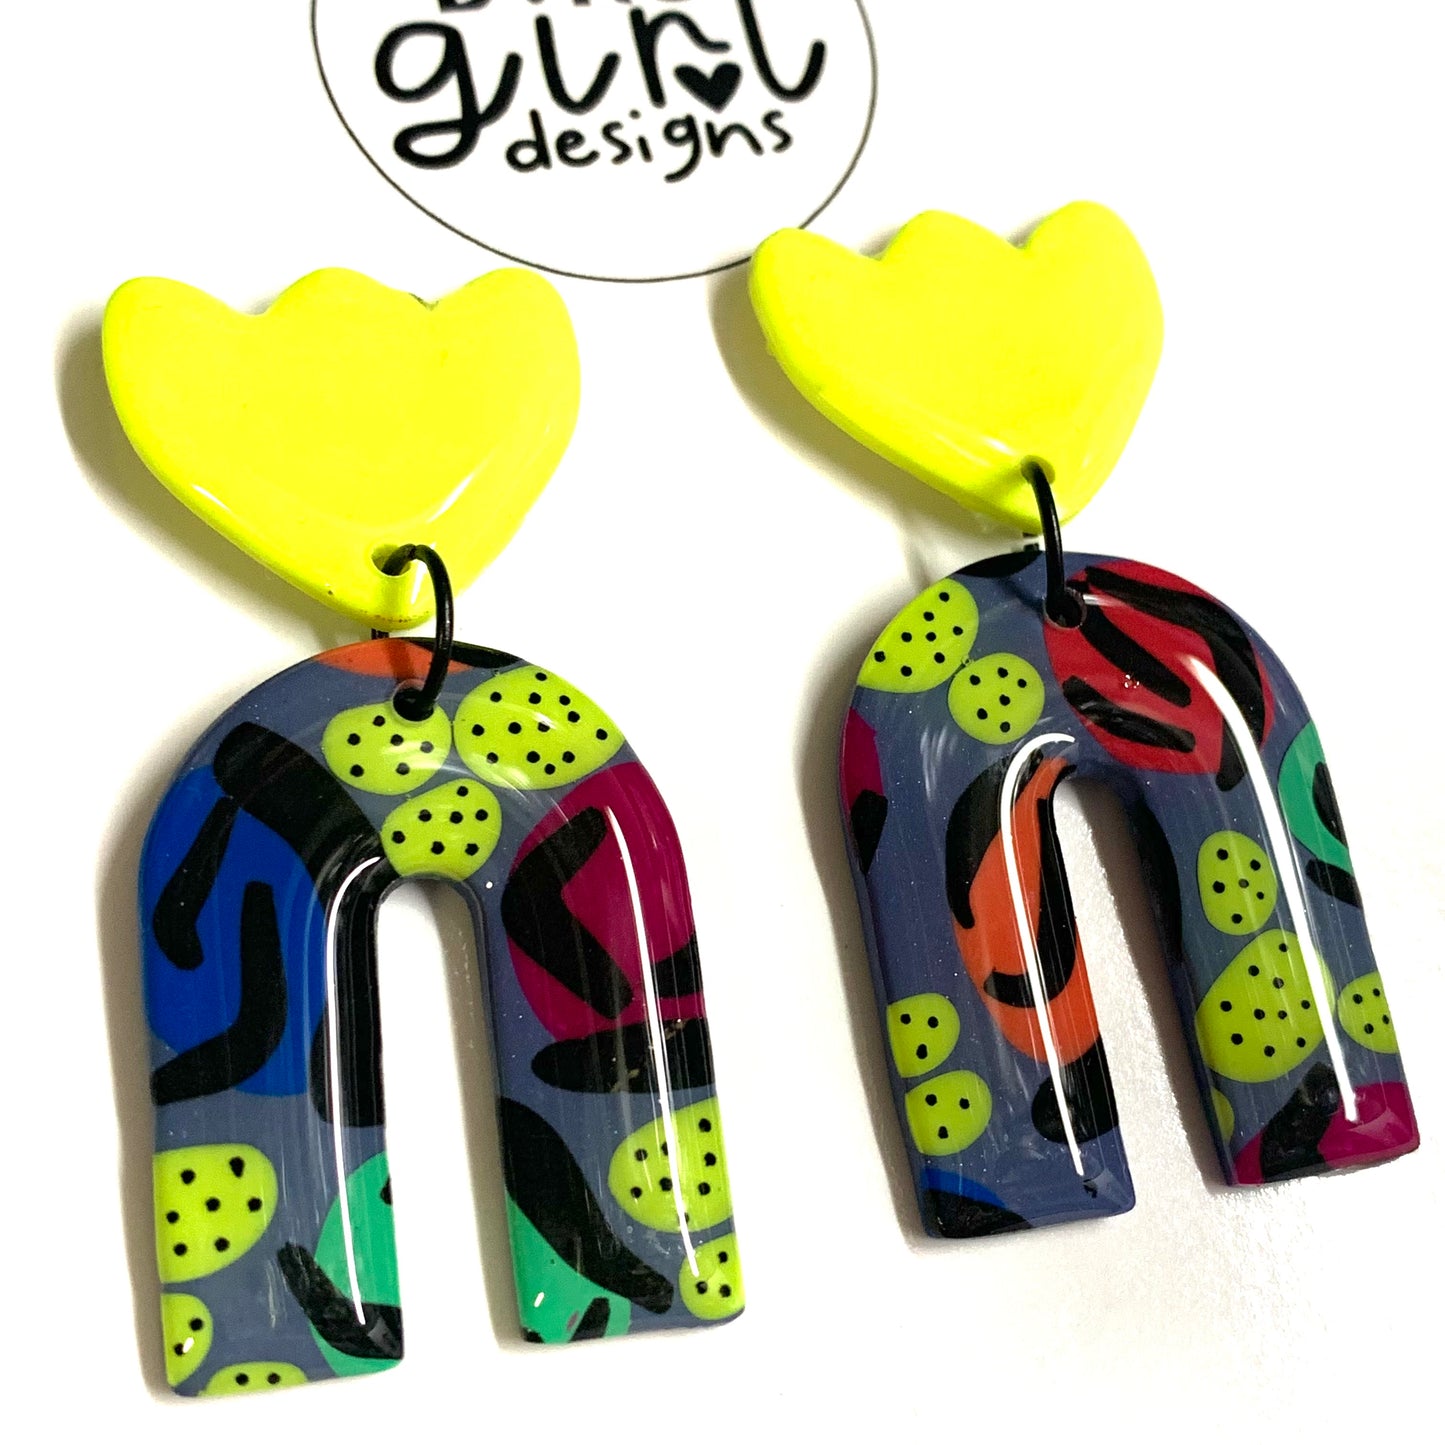 Dang Girl Designs - Neon Amazon Arch Earrings- Tulip Stud Dangles